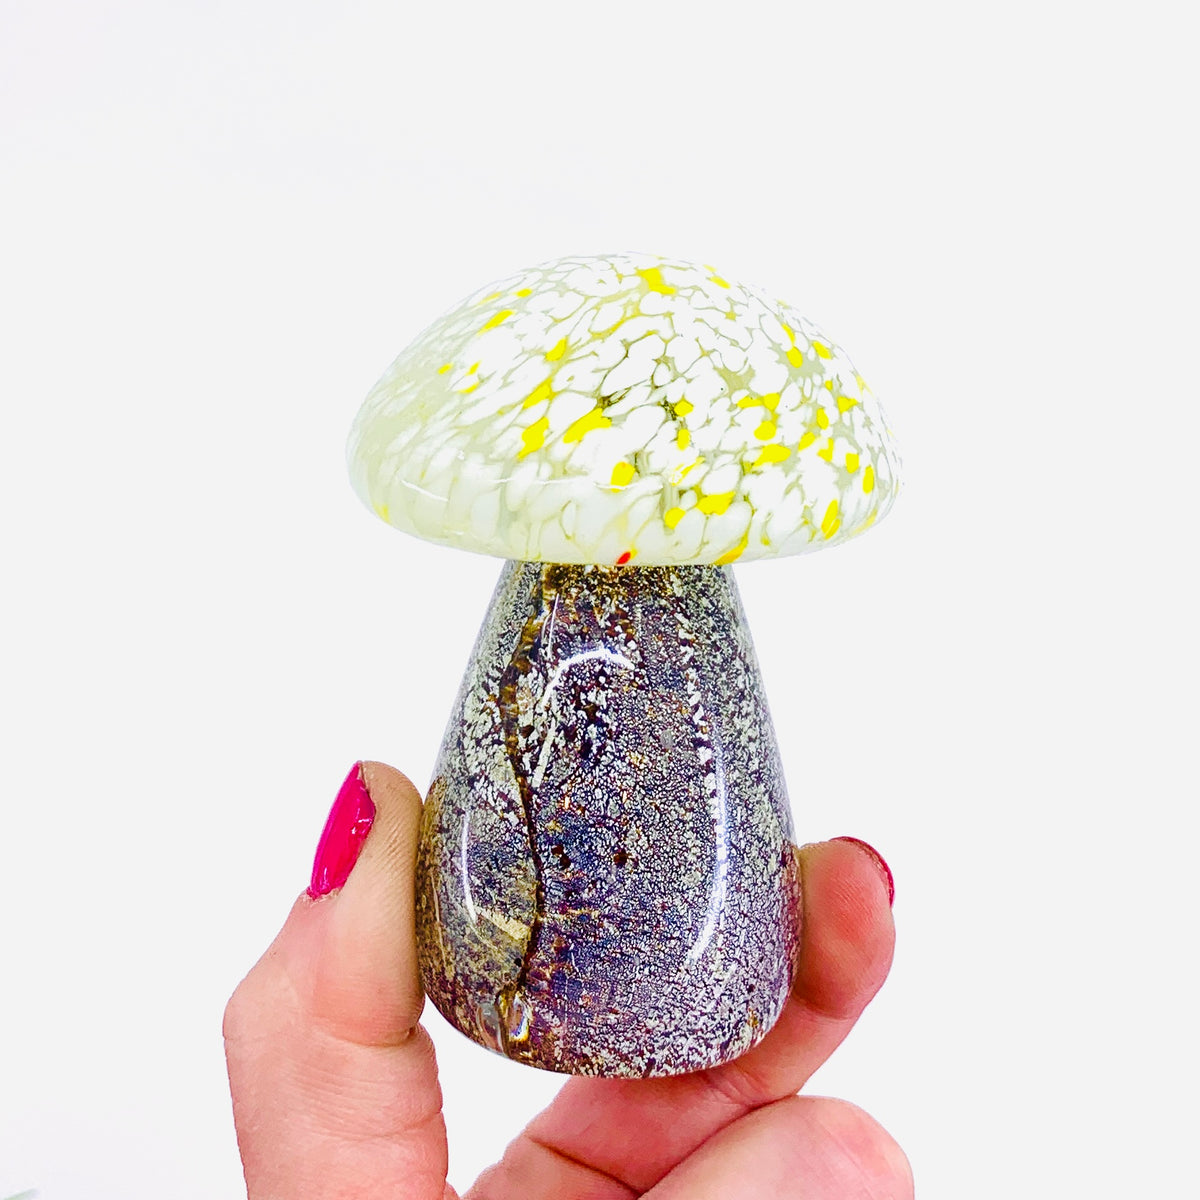 Small Glass Mushroom, Yellow Cap